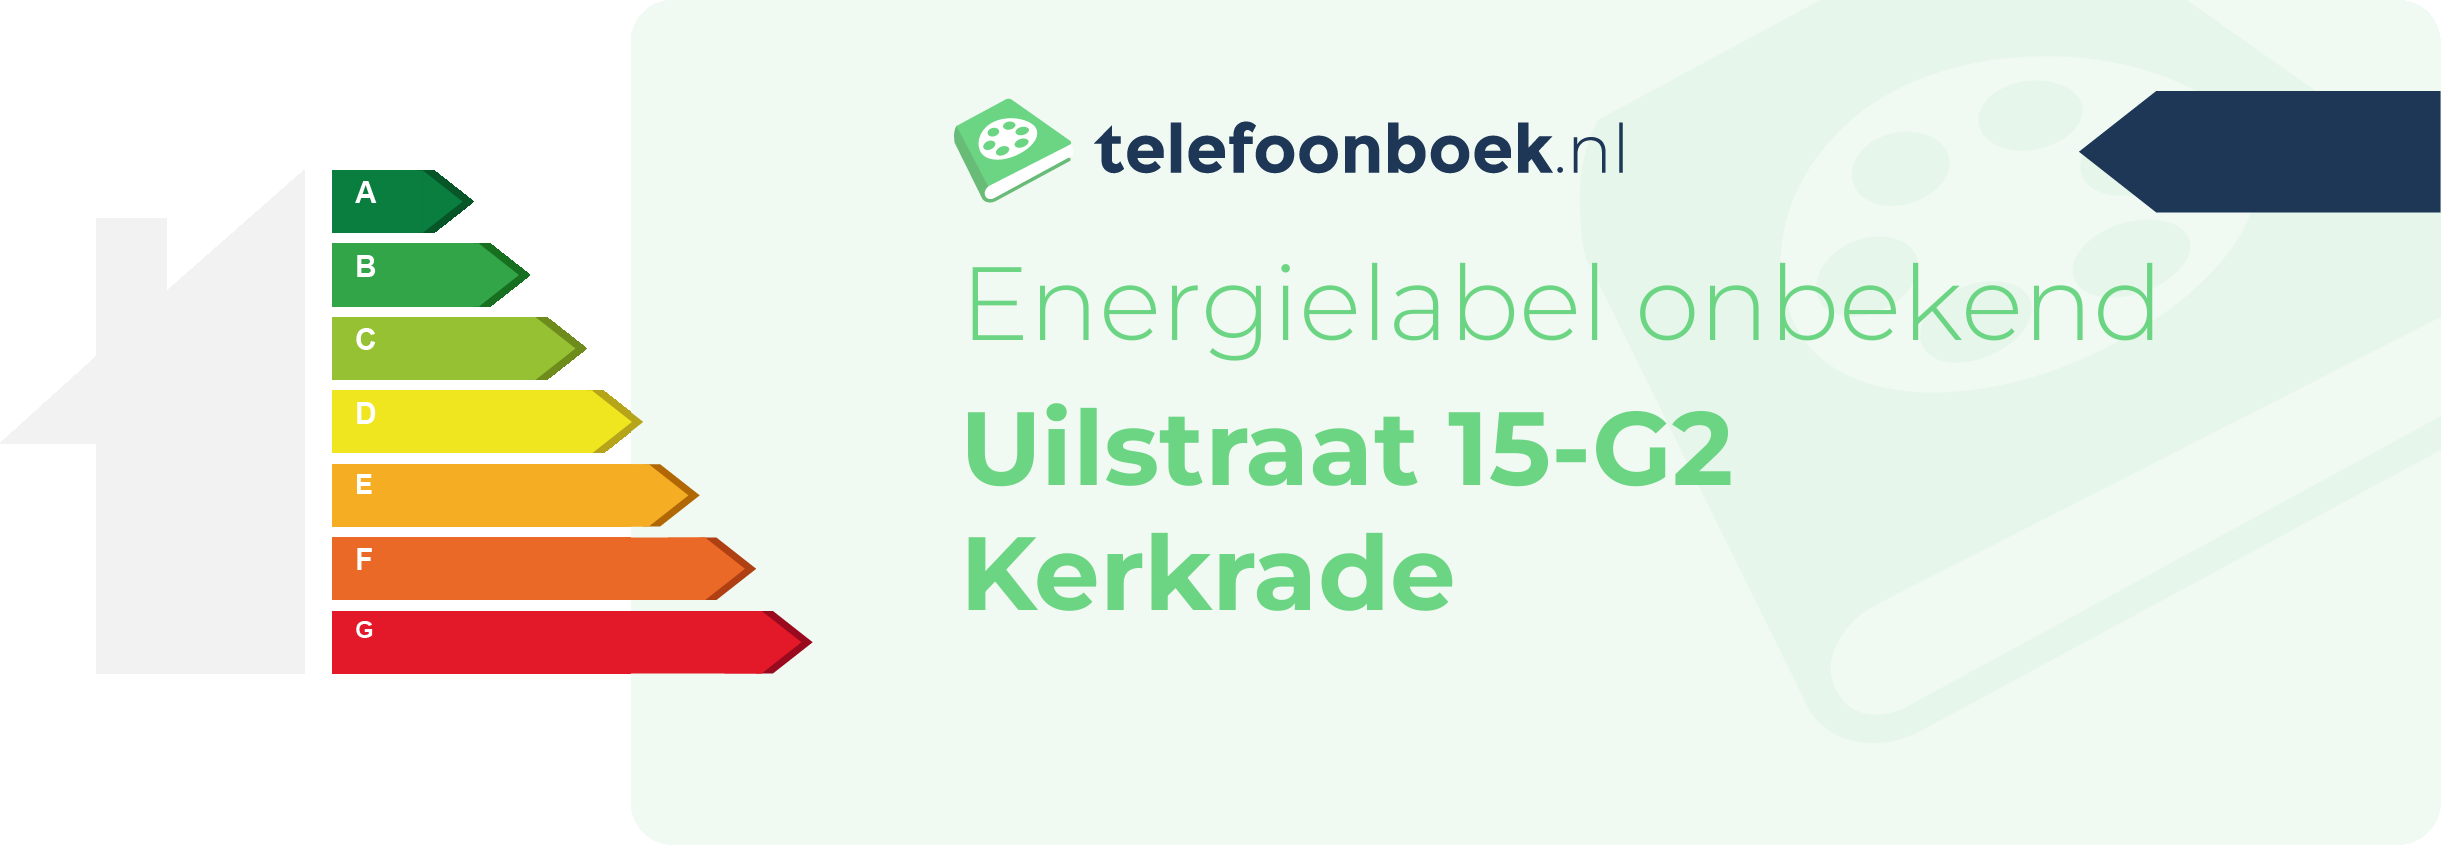 Energielabel Uilstraat 15-G2 Kerkrade